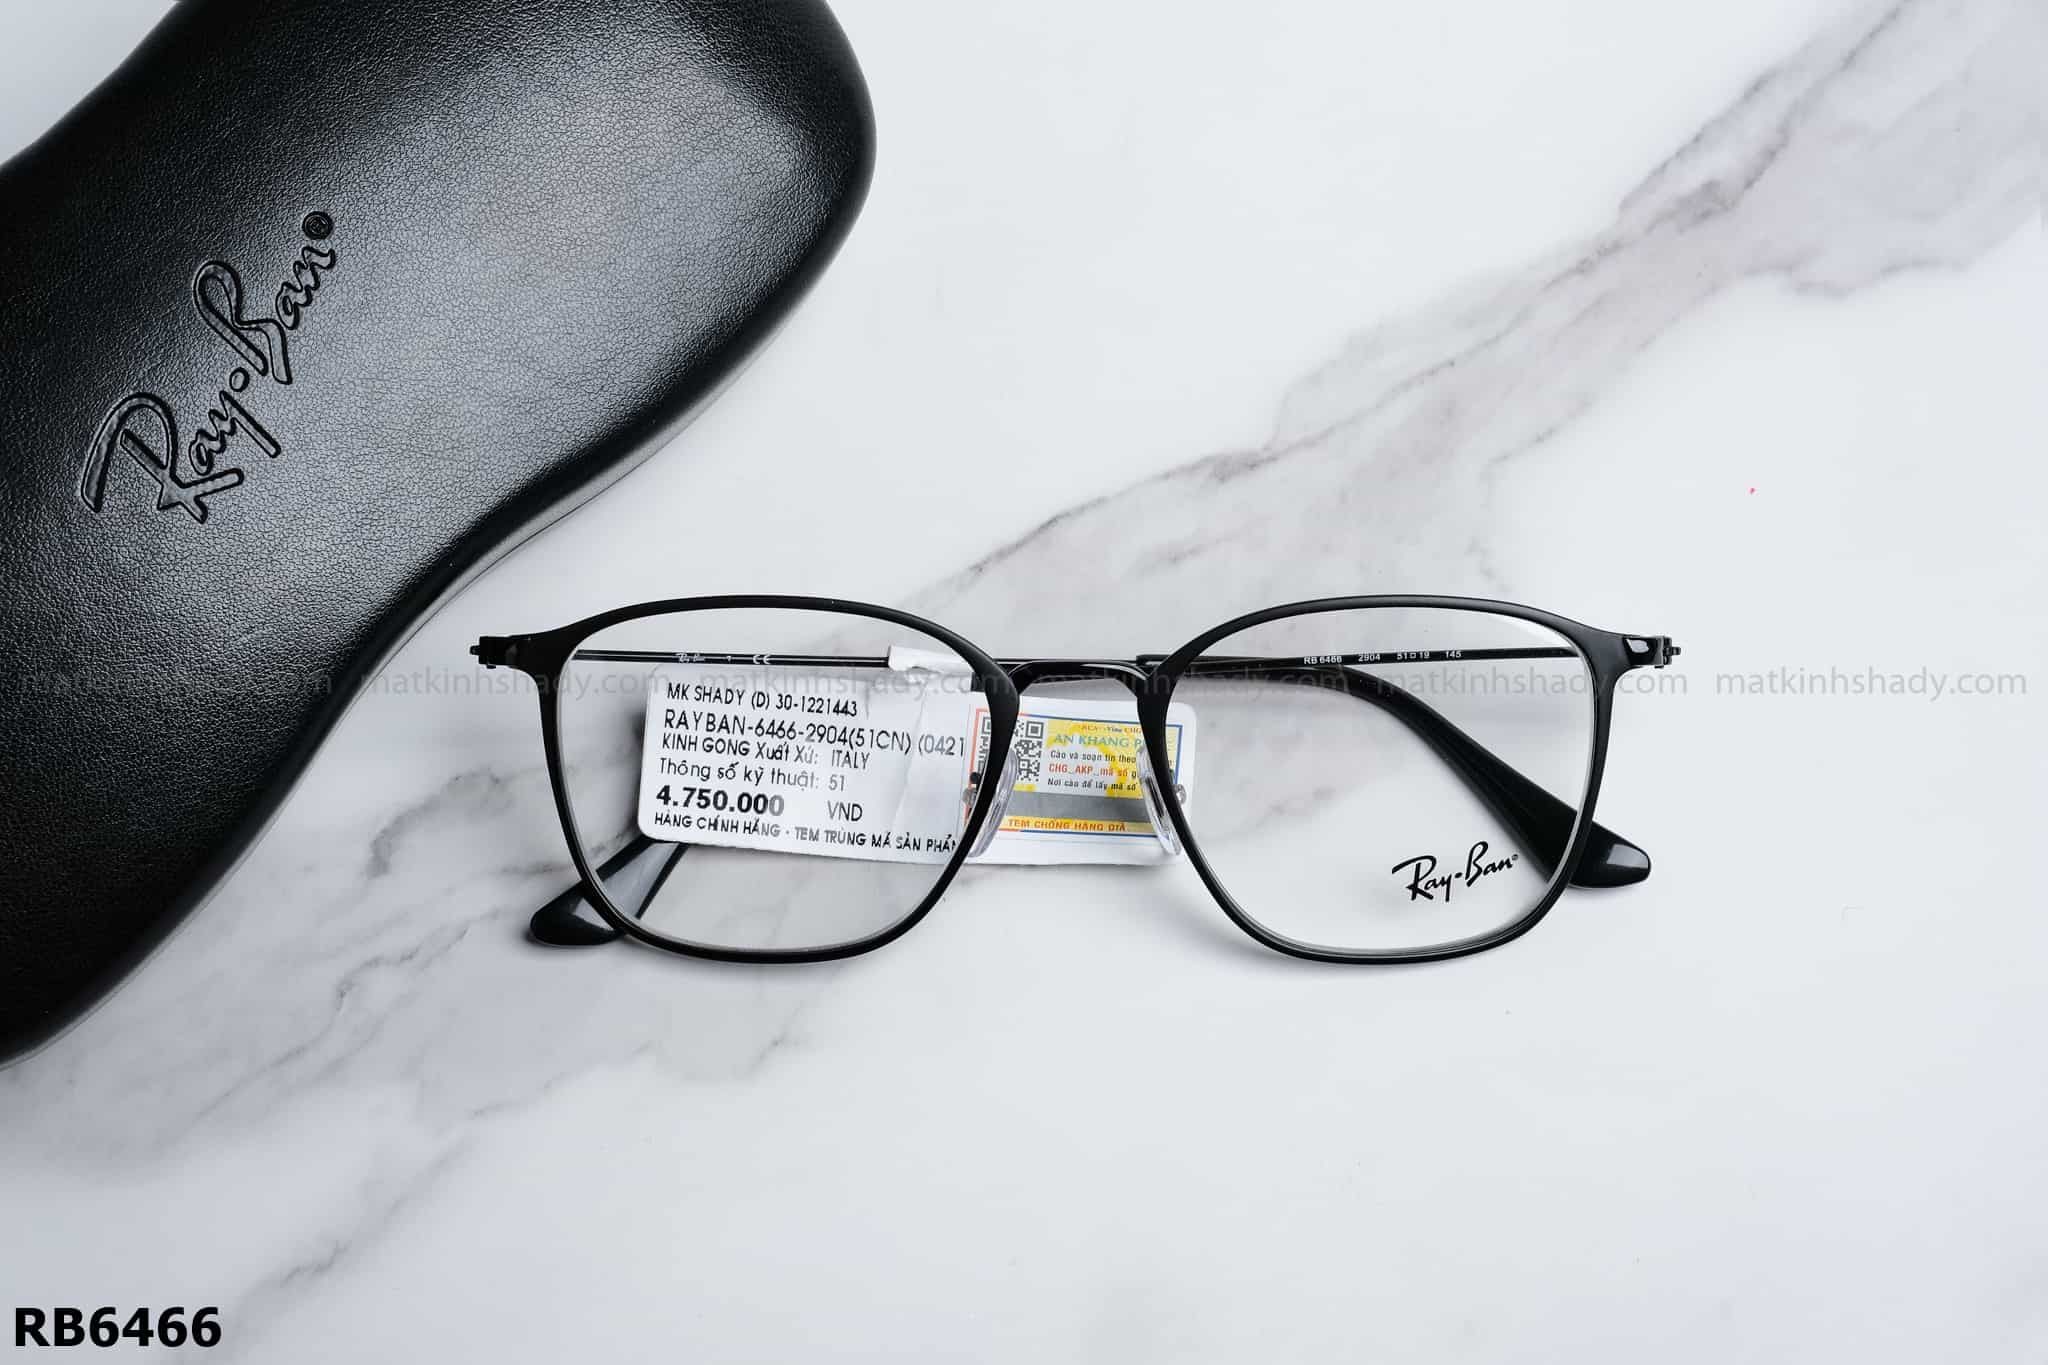  Rayban Eyewear - Glasses - RB6466 